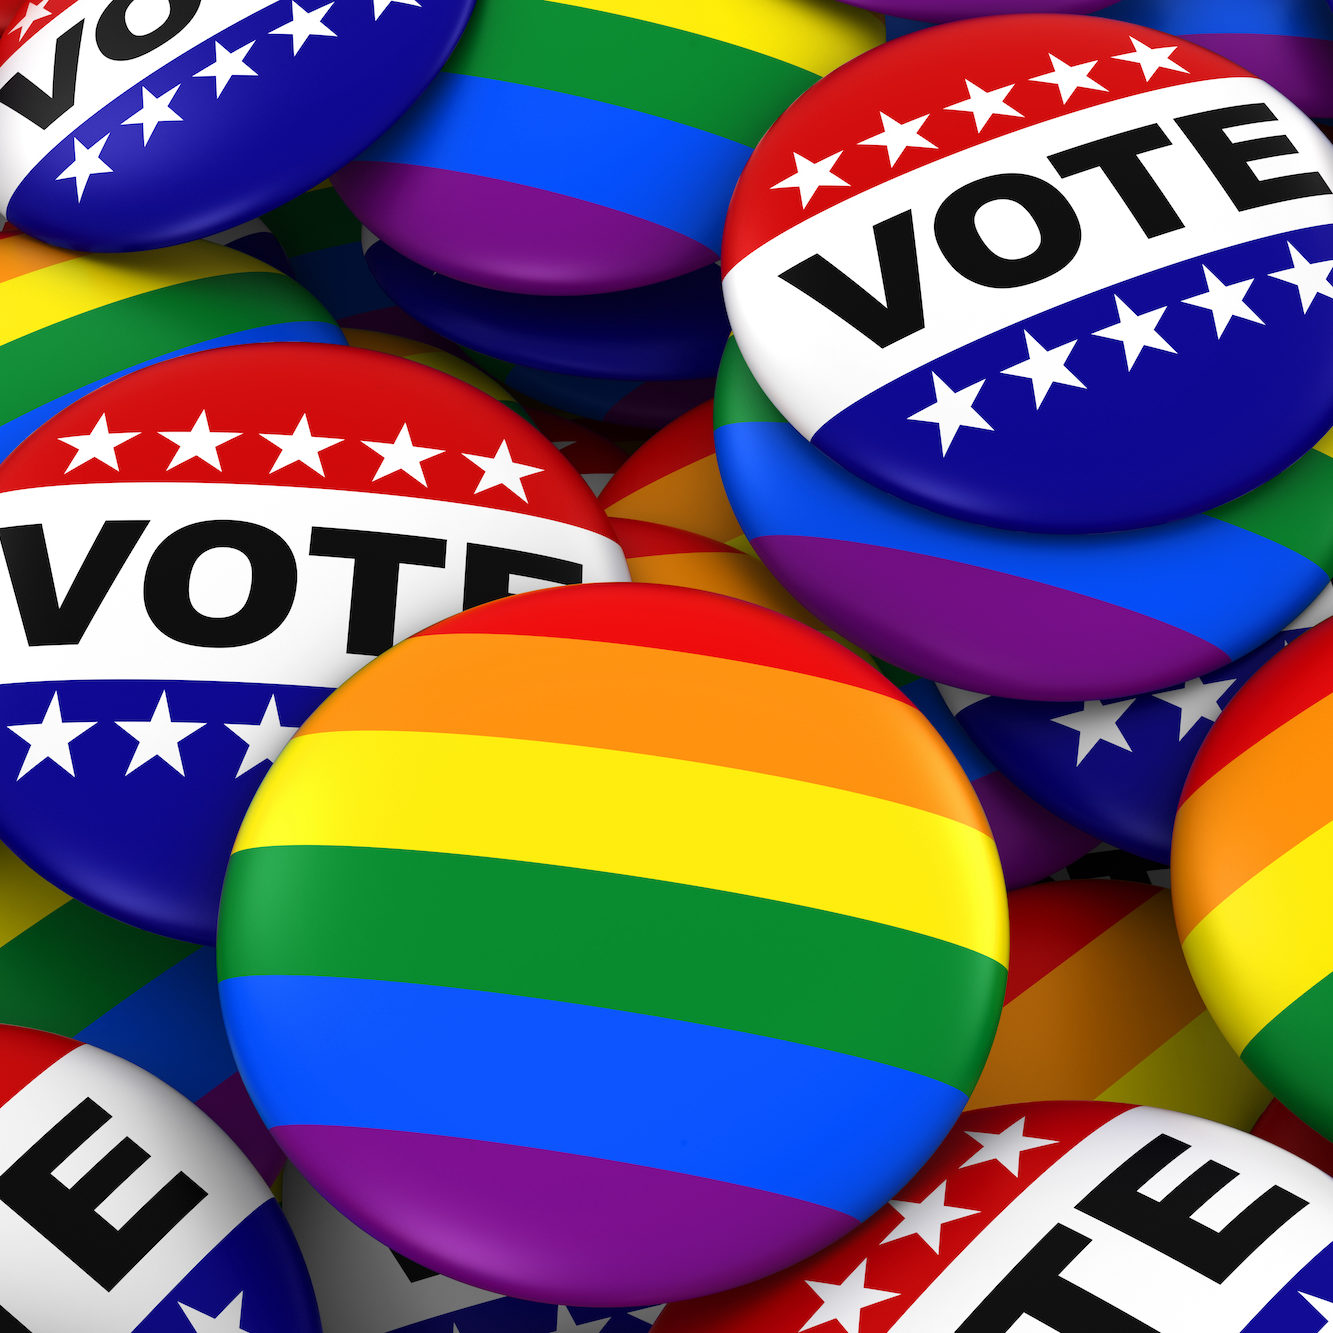 Vote & LGBTQ+ pride buttons in pile